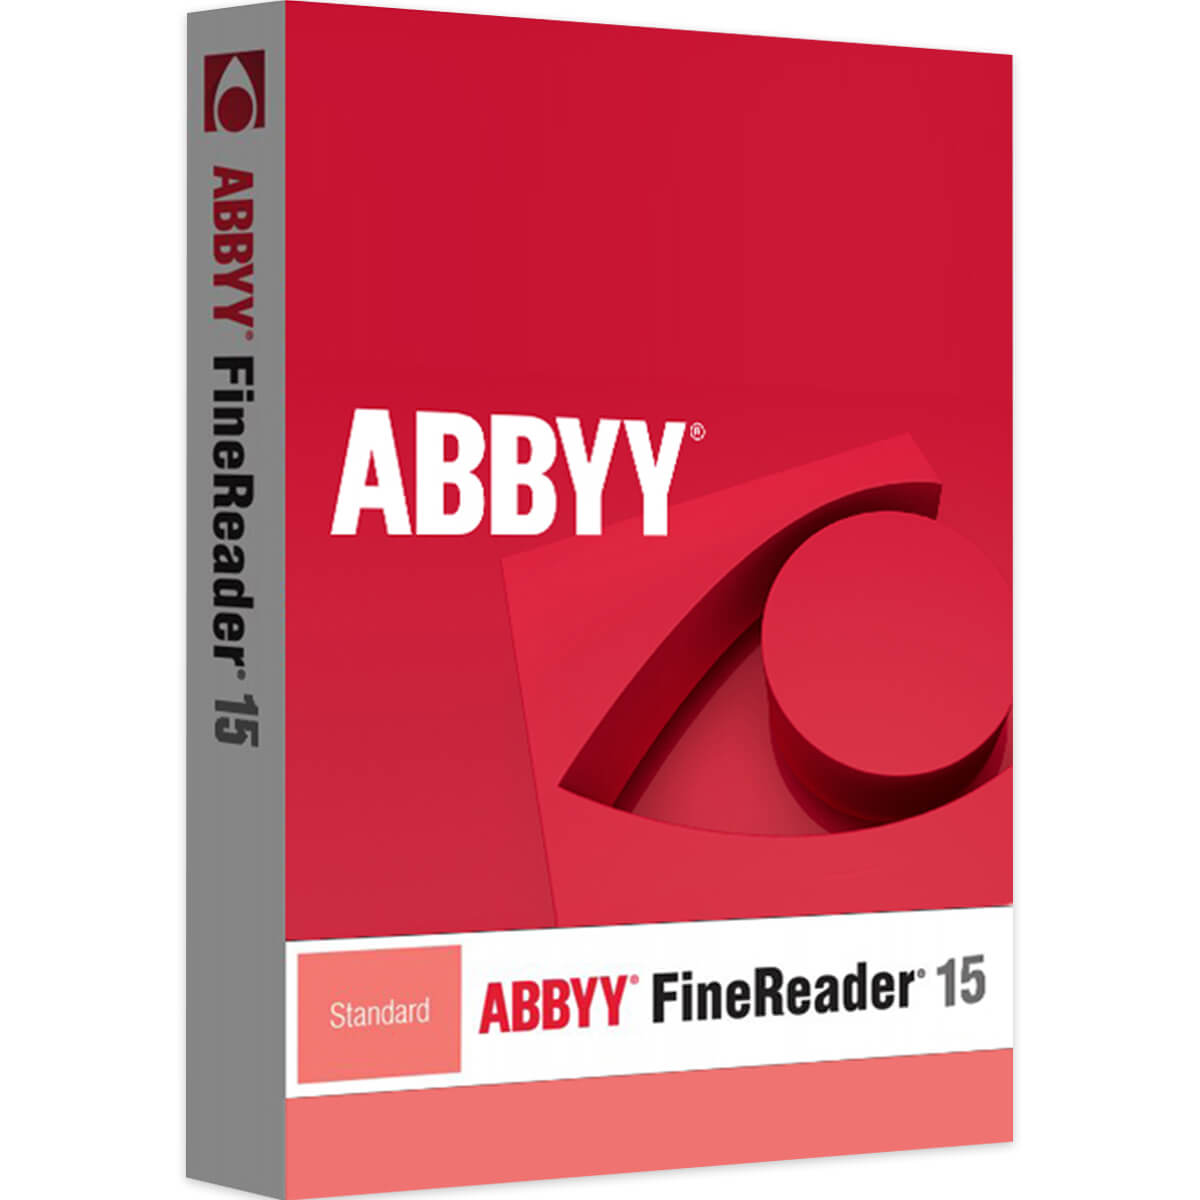 abbyy finereader pdf mac